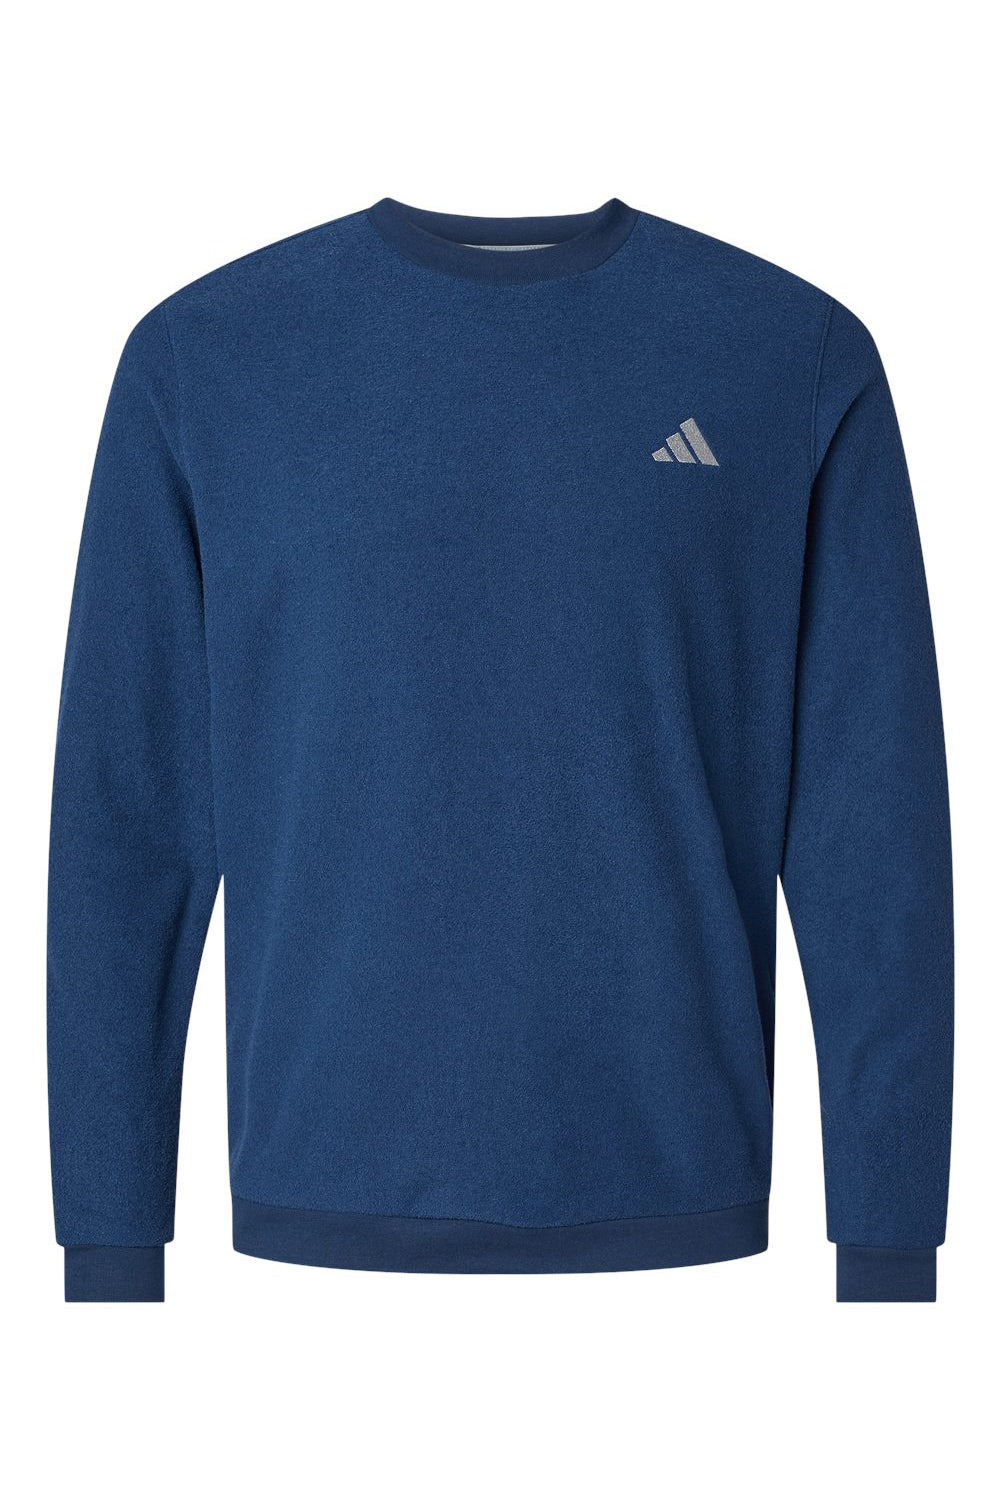 Adidas A586 Mens Crewneck Sweatshirt Collegiate Navy Blue Flat Front